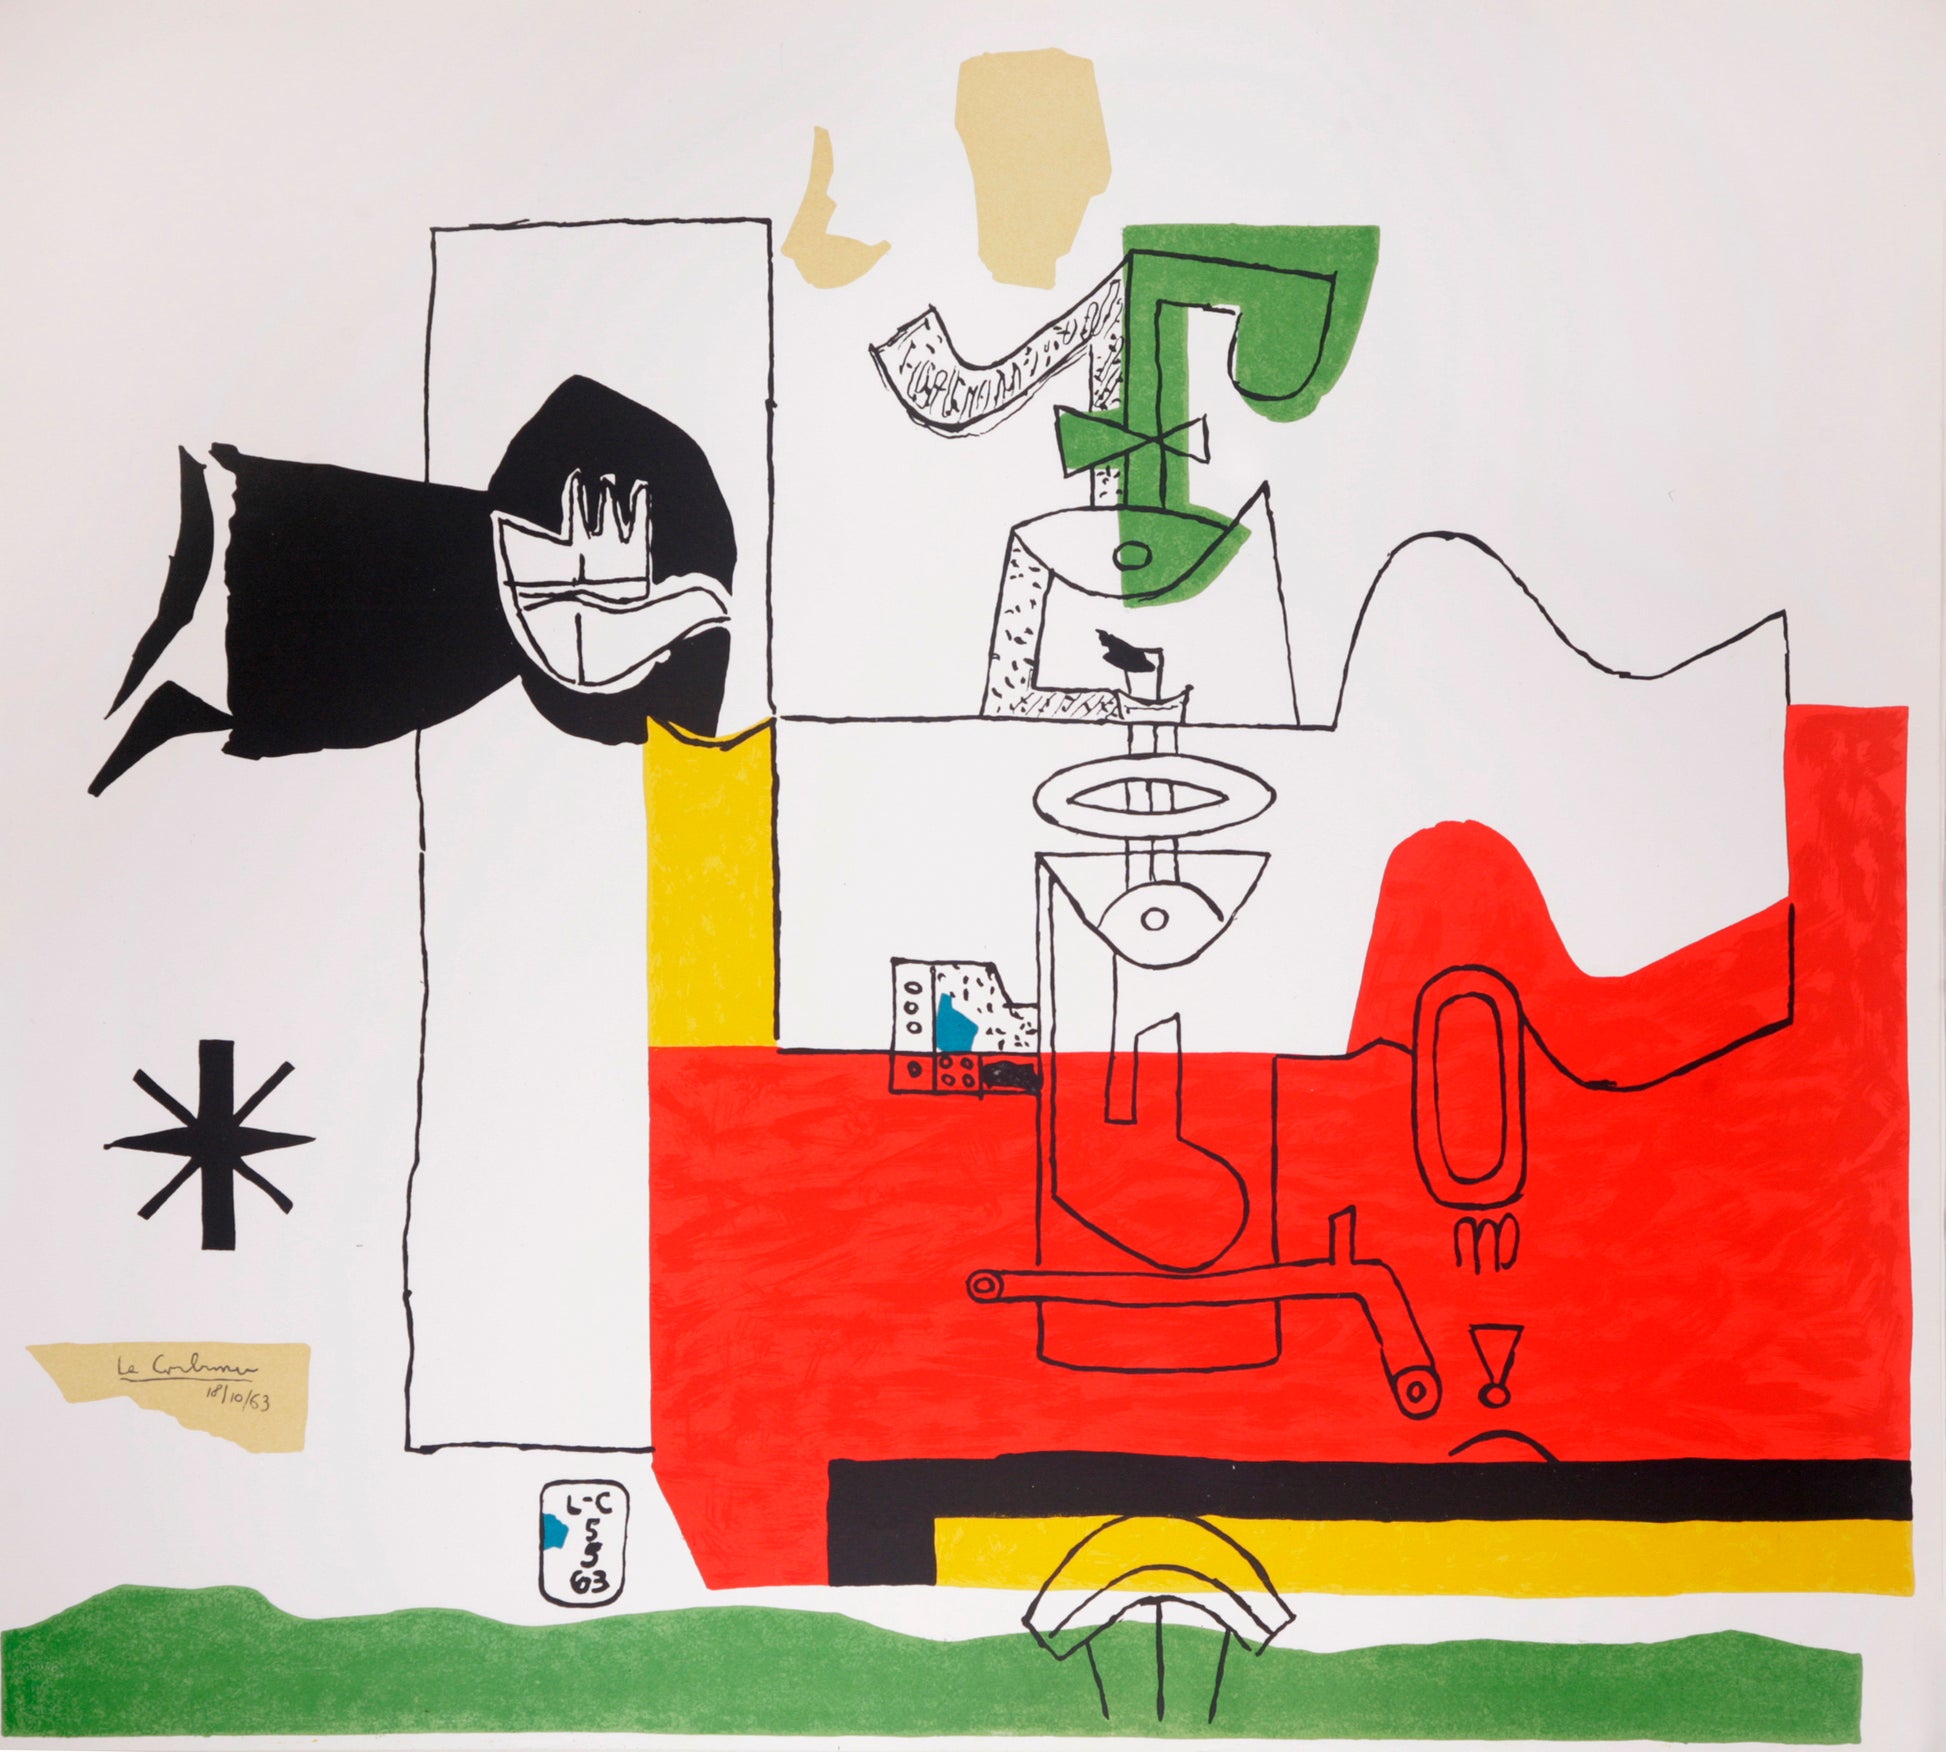 Totem by Le Corbusier, 1963 - Mourlot Editions - Fine_Art - Poster - Lithograph - Wall Art - Vintage - Prints - Original